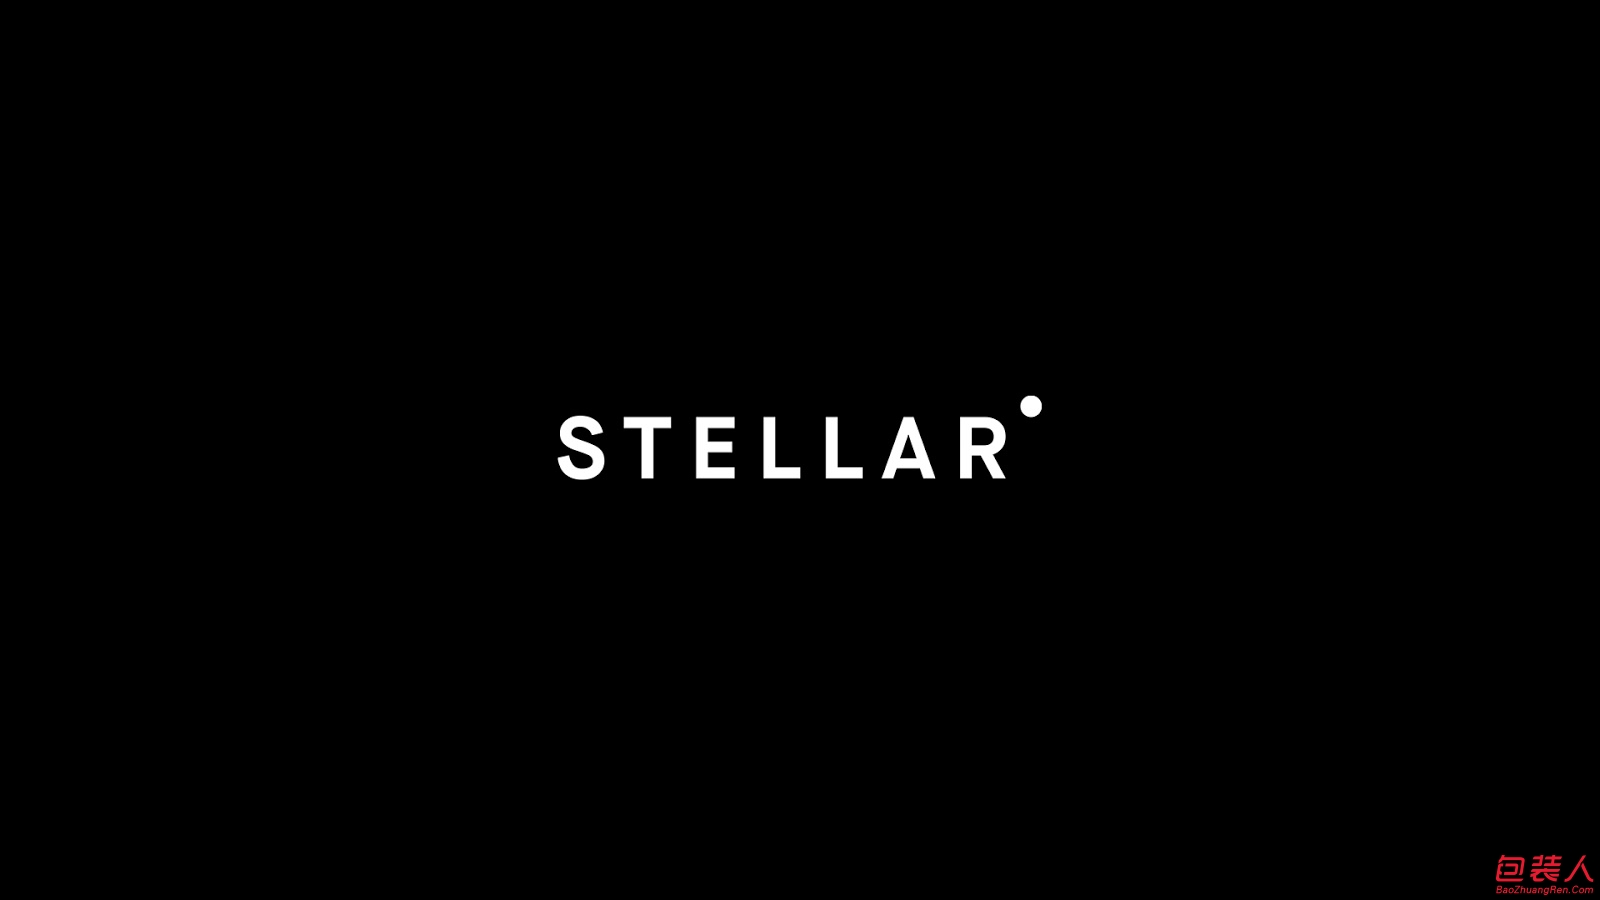 Stellar-01.jpg